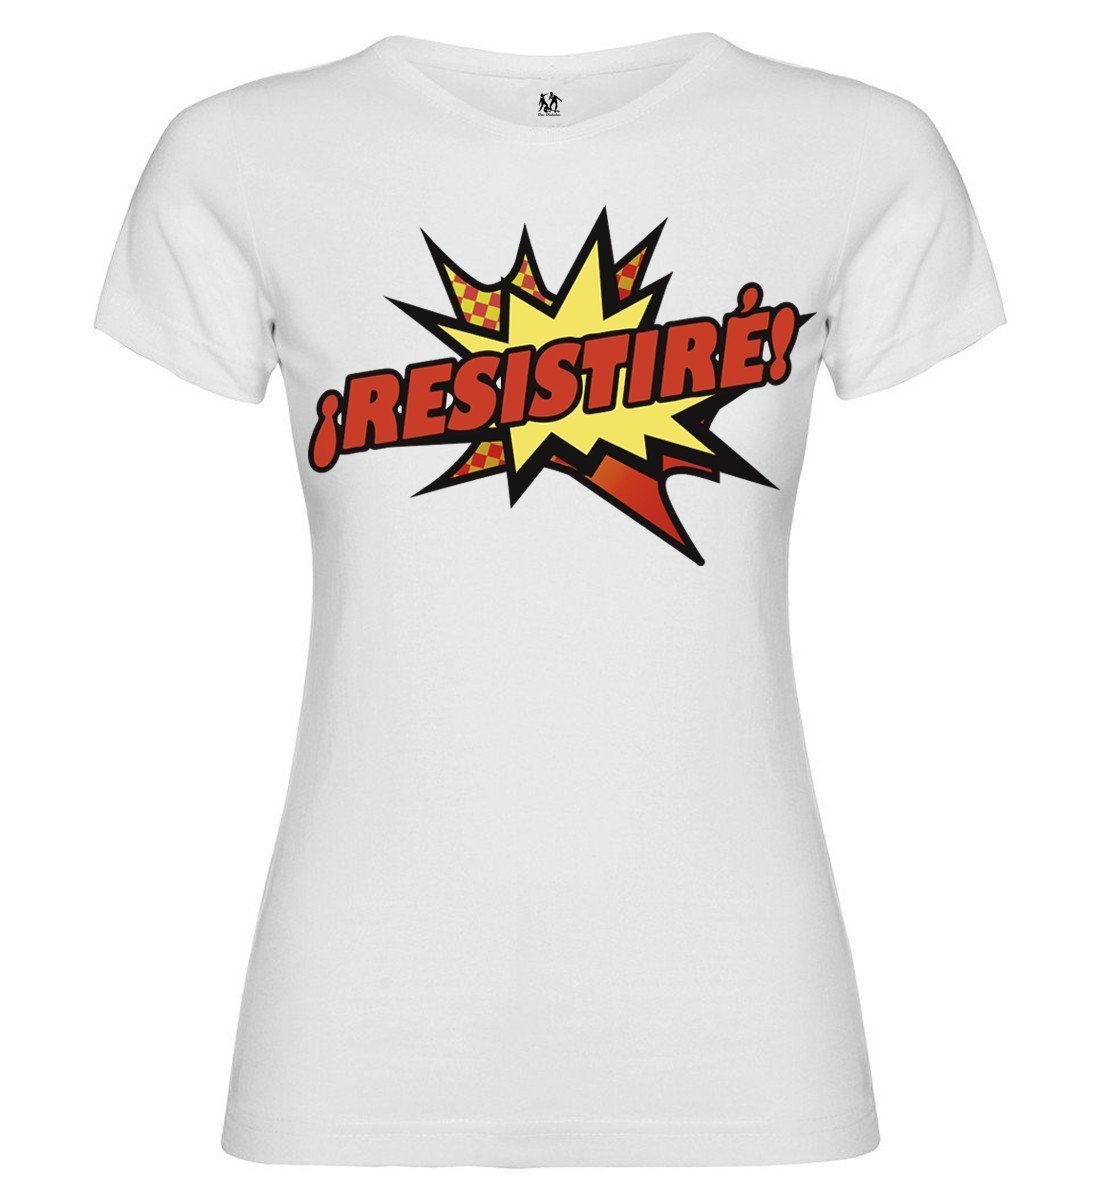 El Dúo Dinámico - Camiseta Chica "Resistiré" - D2fy · Rocktud - Duo Dinámico